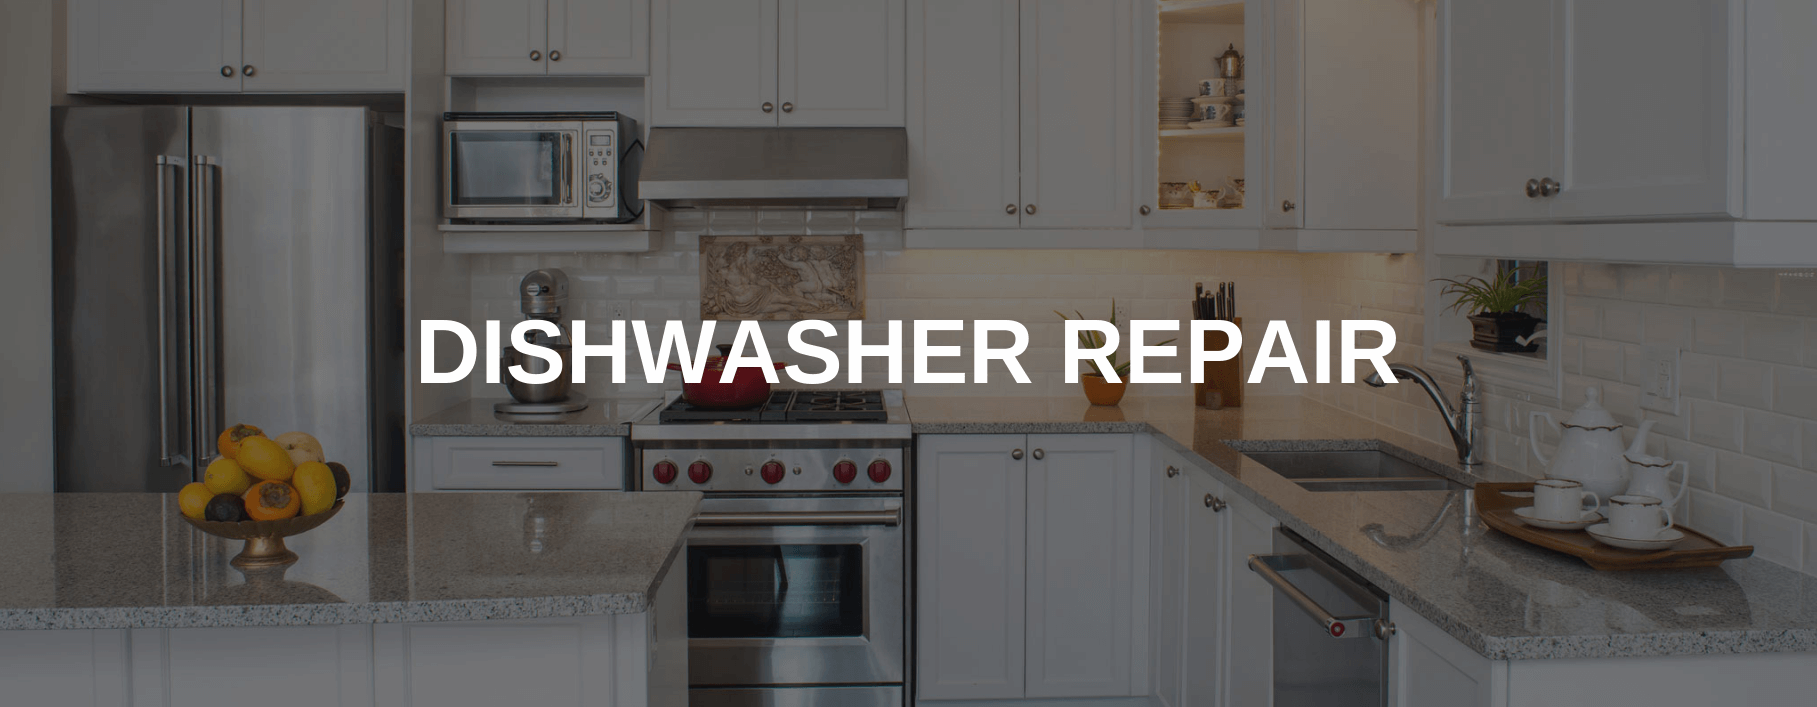 dishwasher repair highland